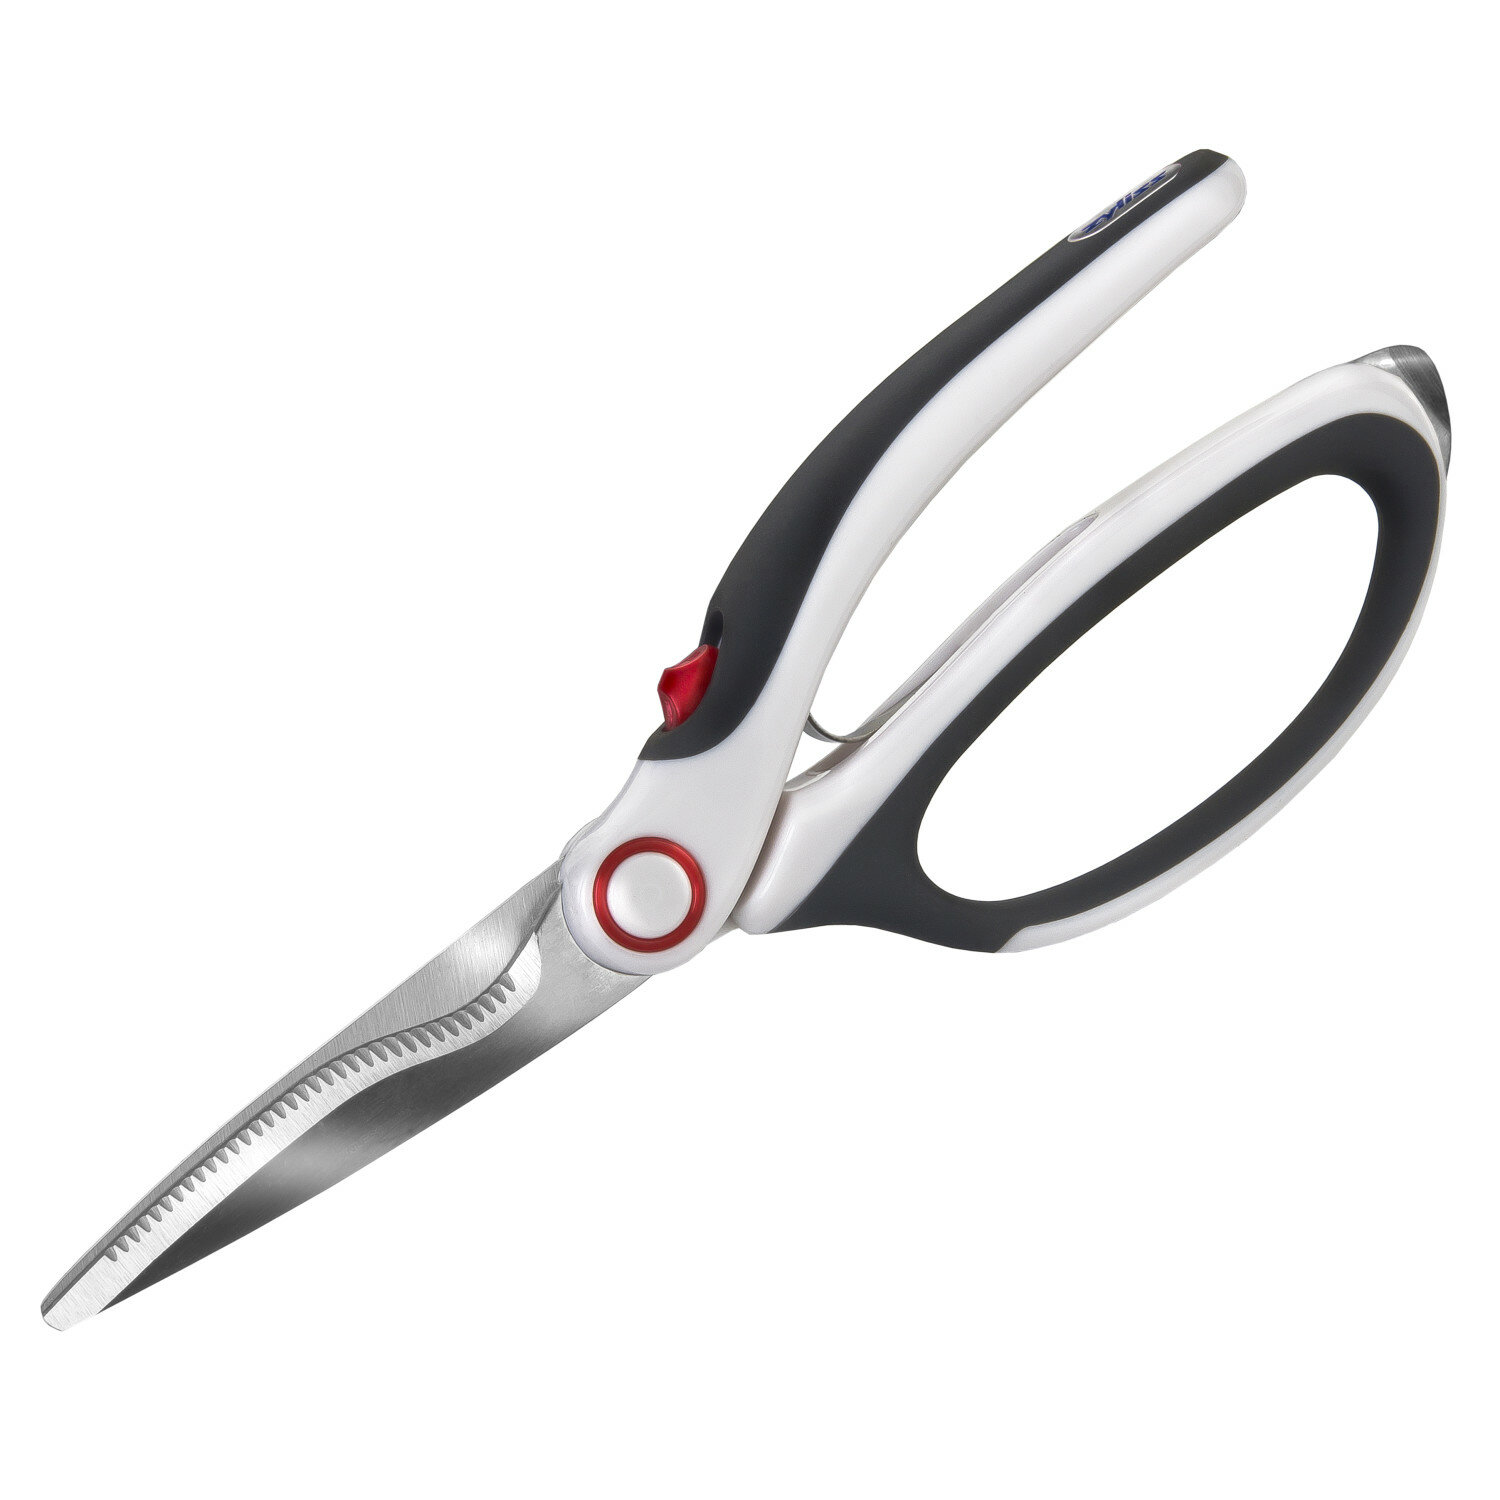 Deiss Pro Kitchen Shears - All Purpose Safe Heavy Duty Kitchen Scissors &  Reviews